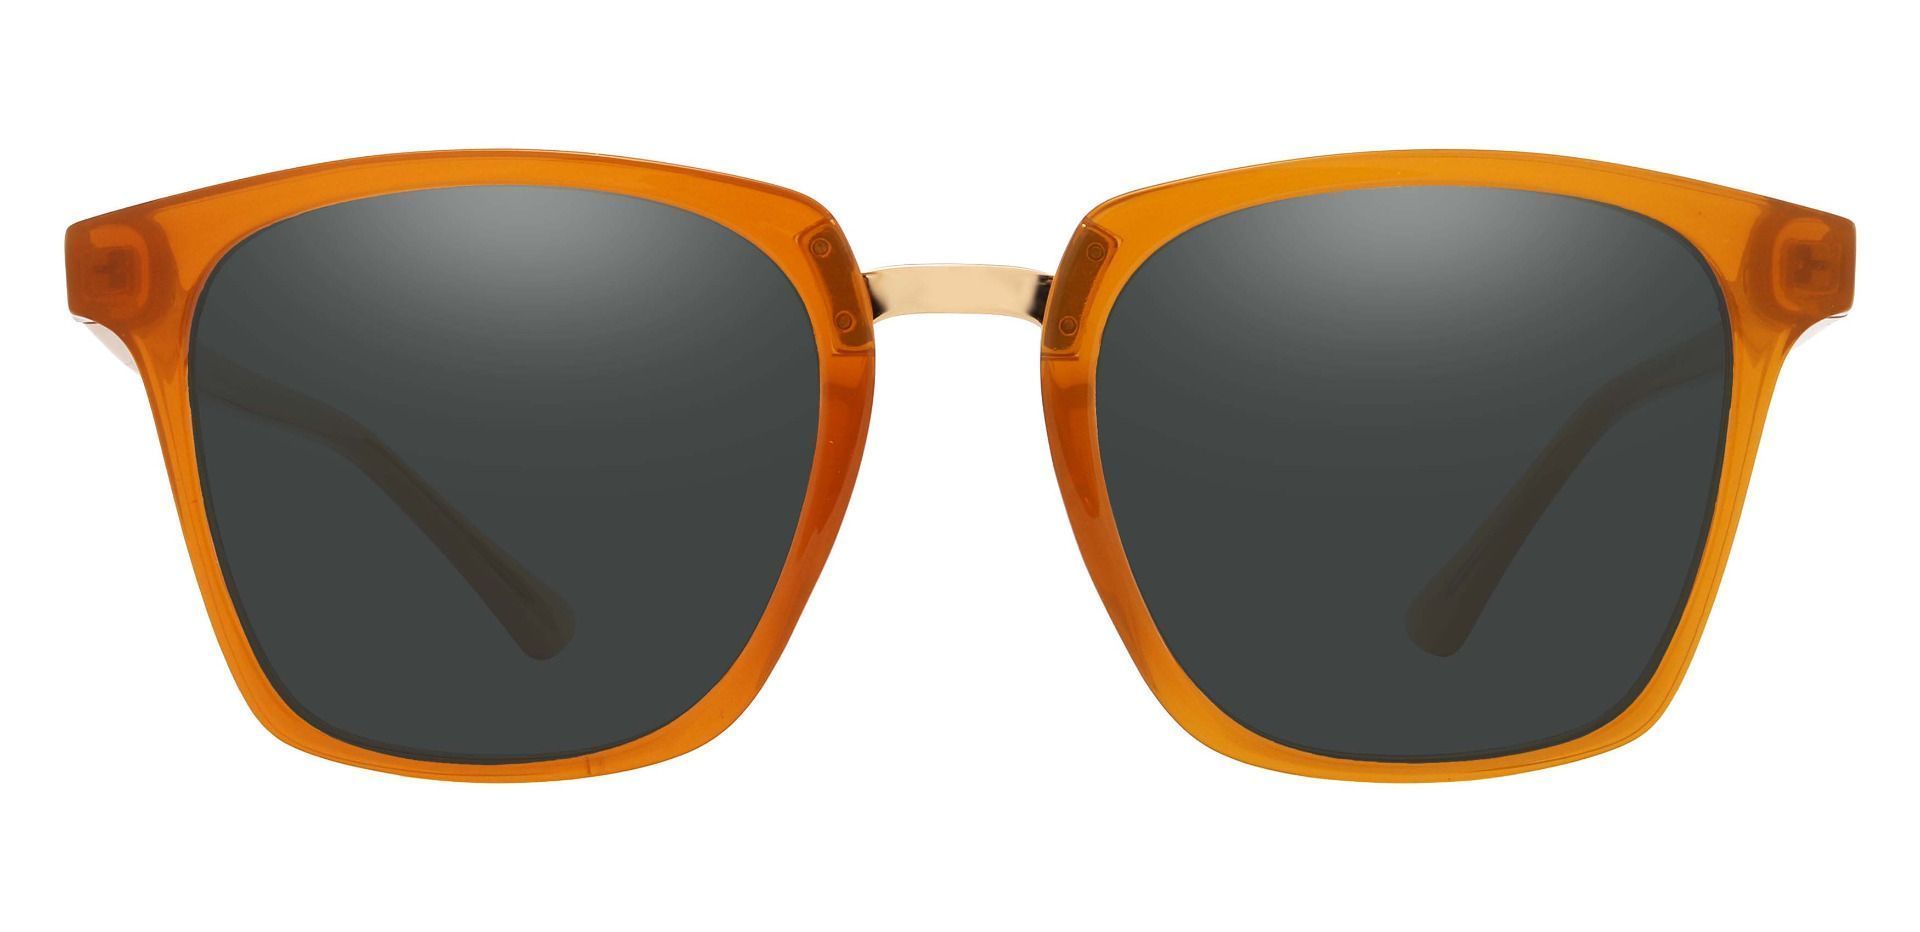 Delta Square Reading Sunglasses - Orange Frame With Gray Lenses